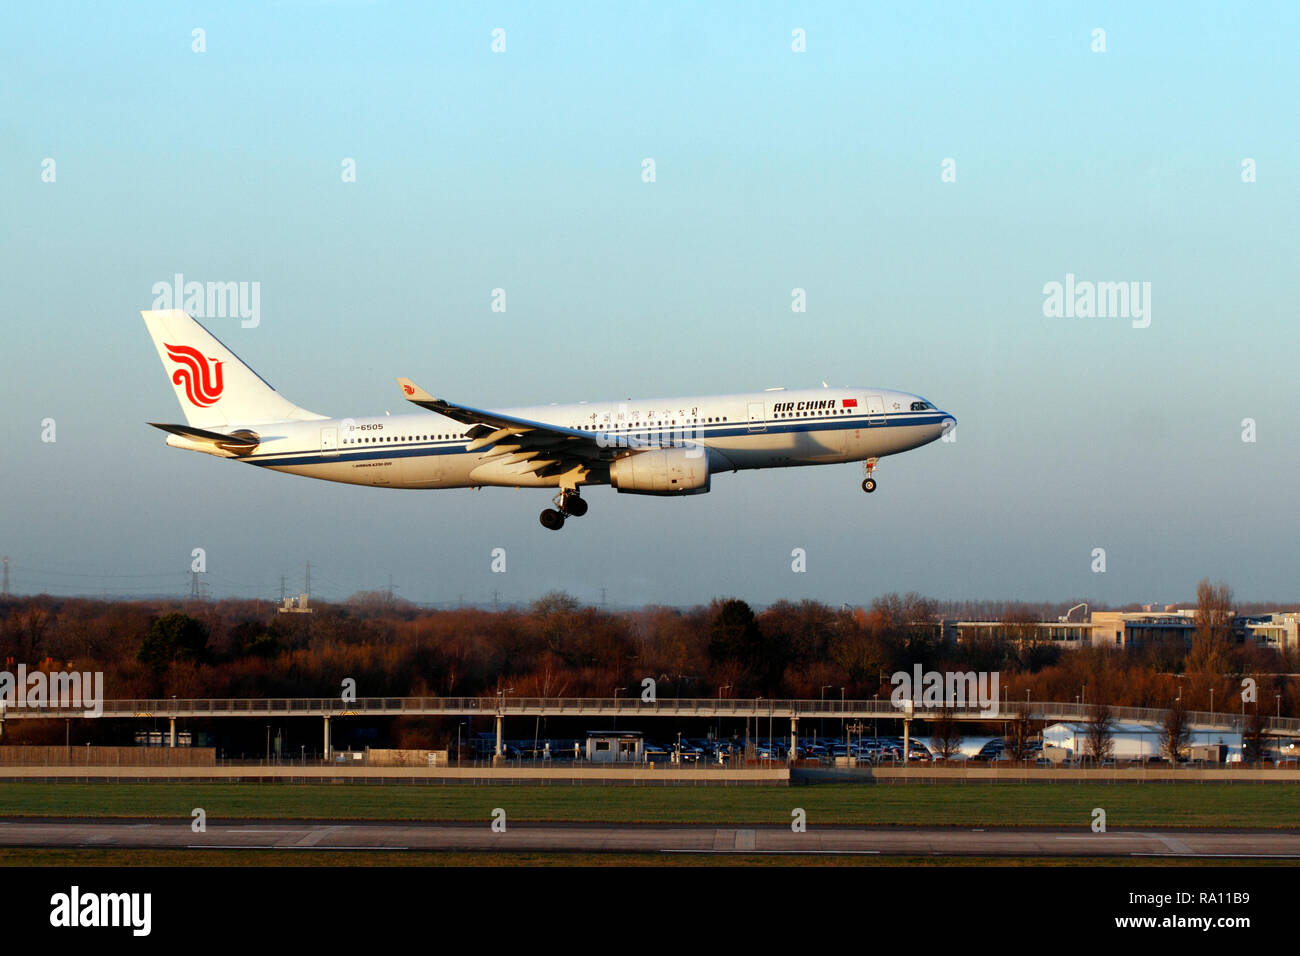 Air China Airbus A330-200 landing at Heathrow Airport, London UK, Terminal 5 runway. Stock Photo